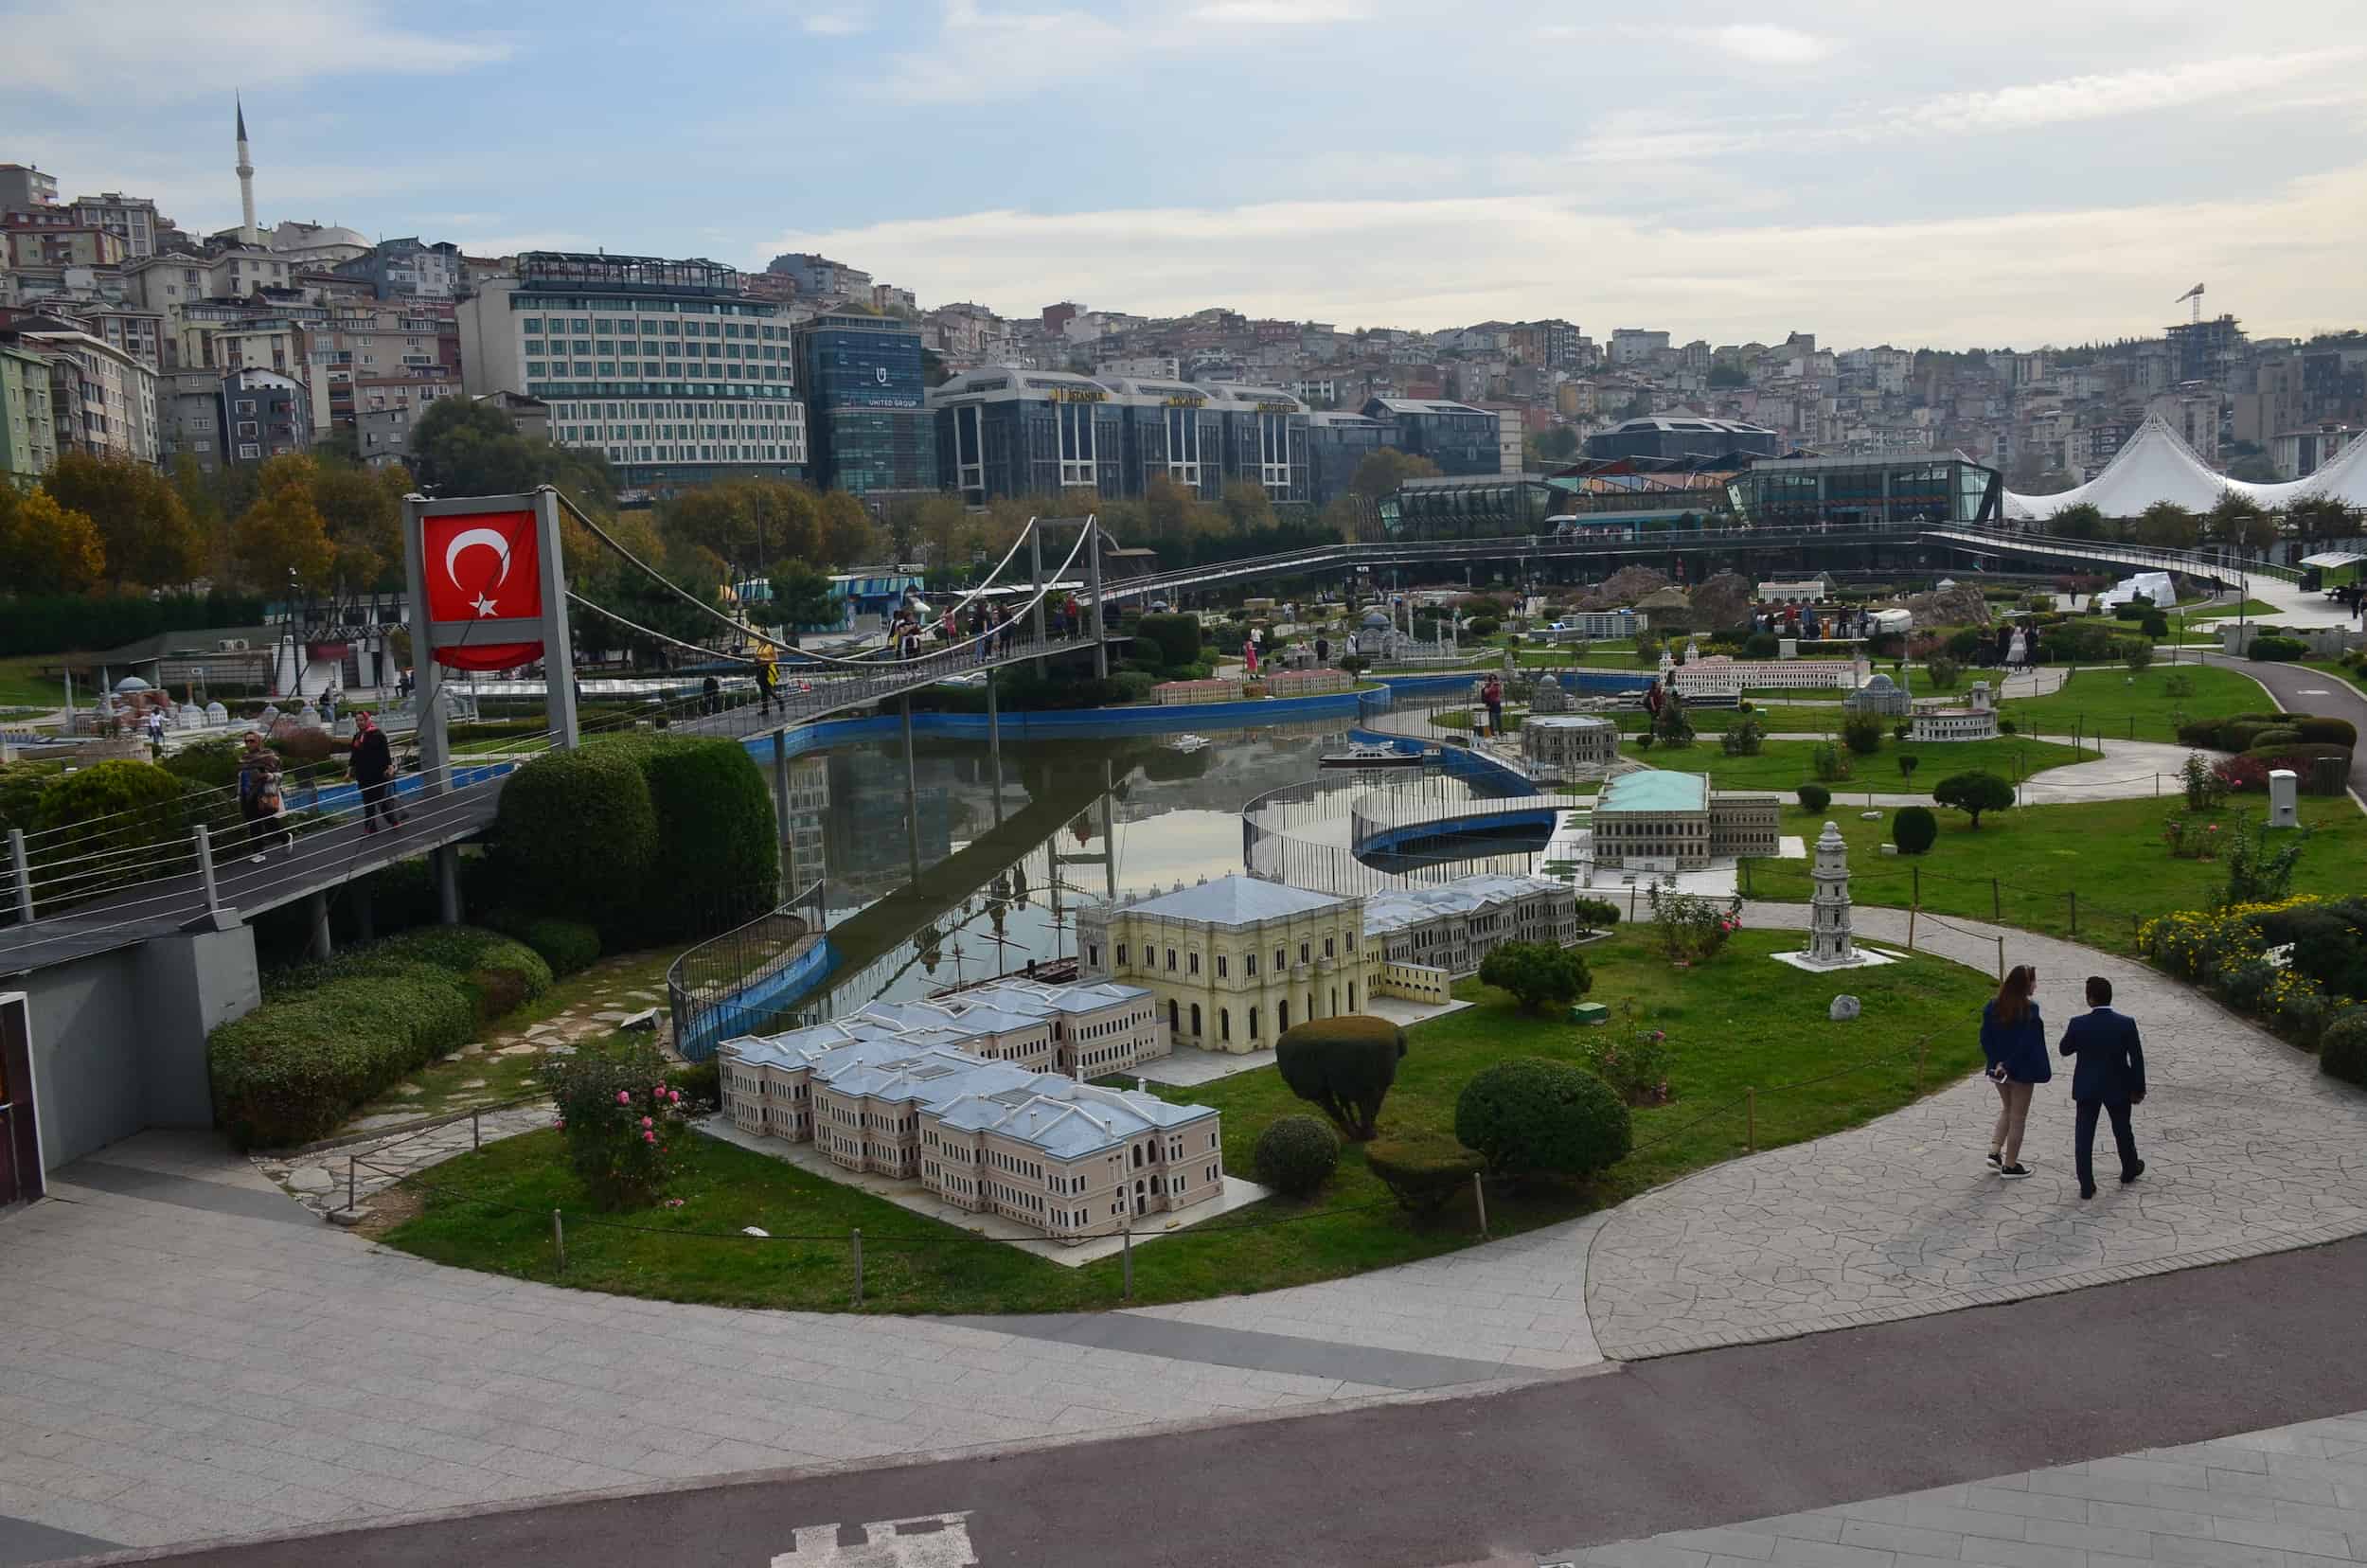 Miniatürk in Istanbul, Turkey